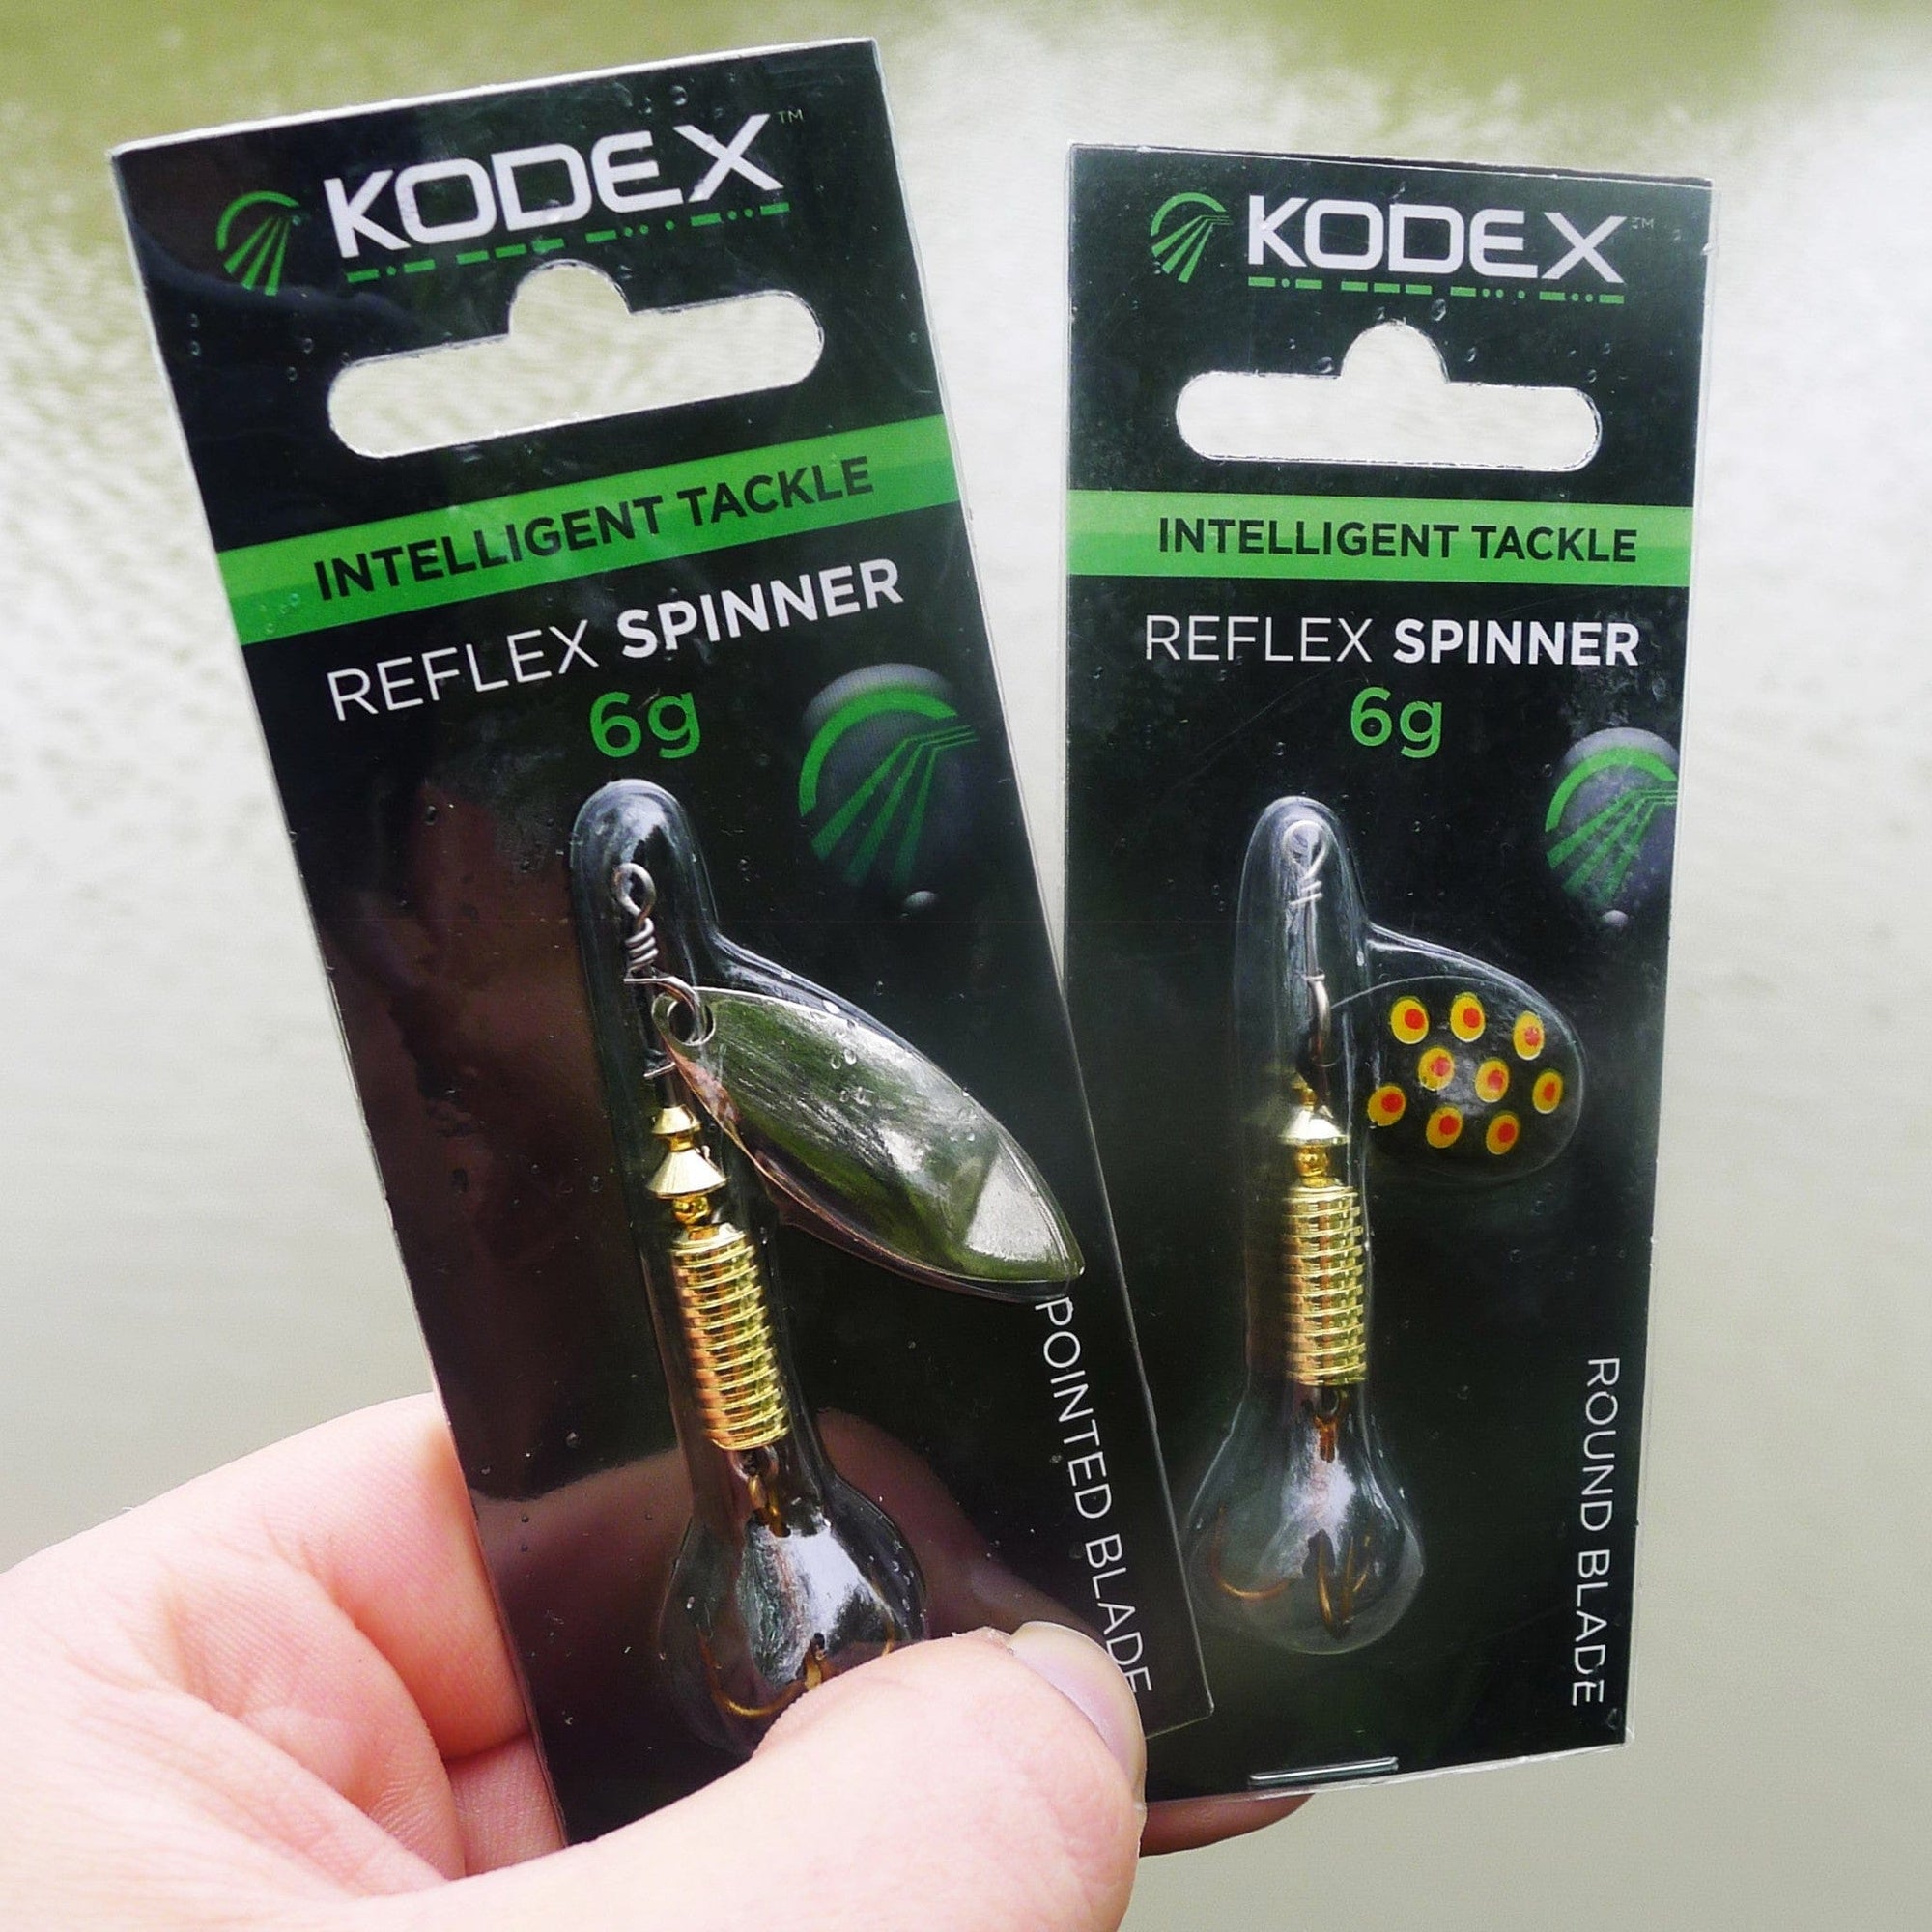 KODEX Reflex Spinner Round-blade Lures - All Shapes & Weights.